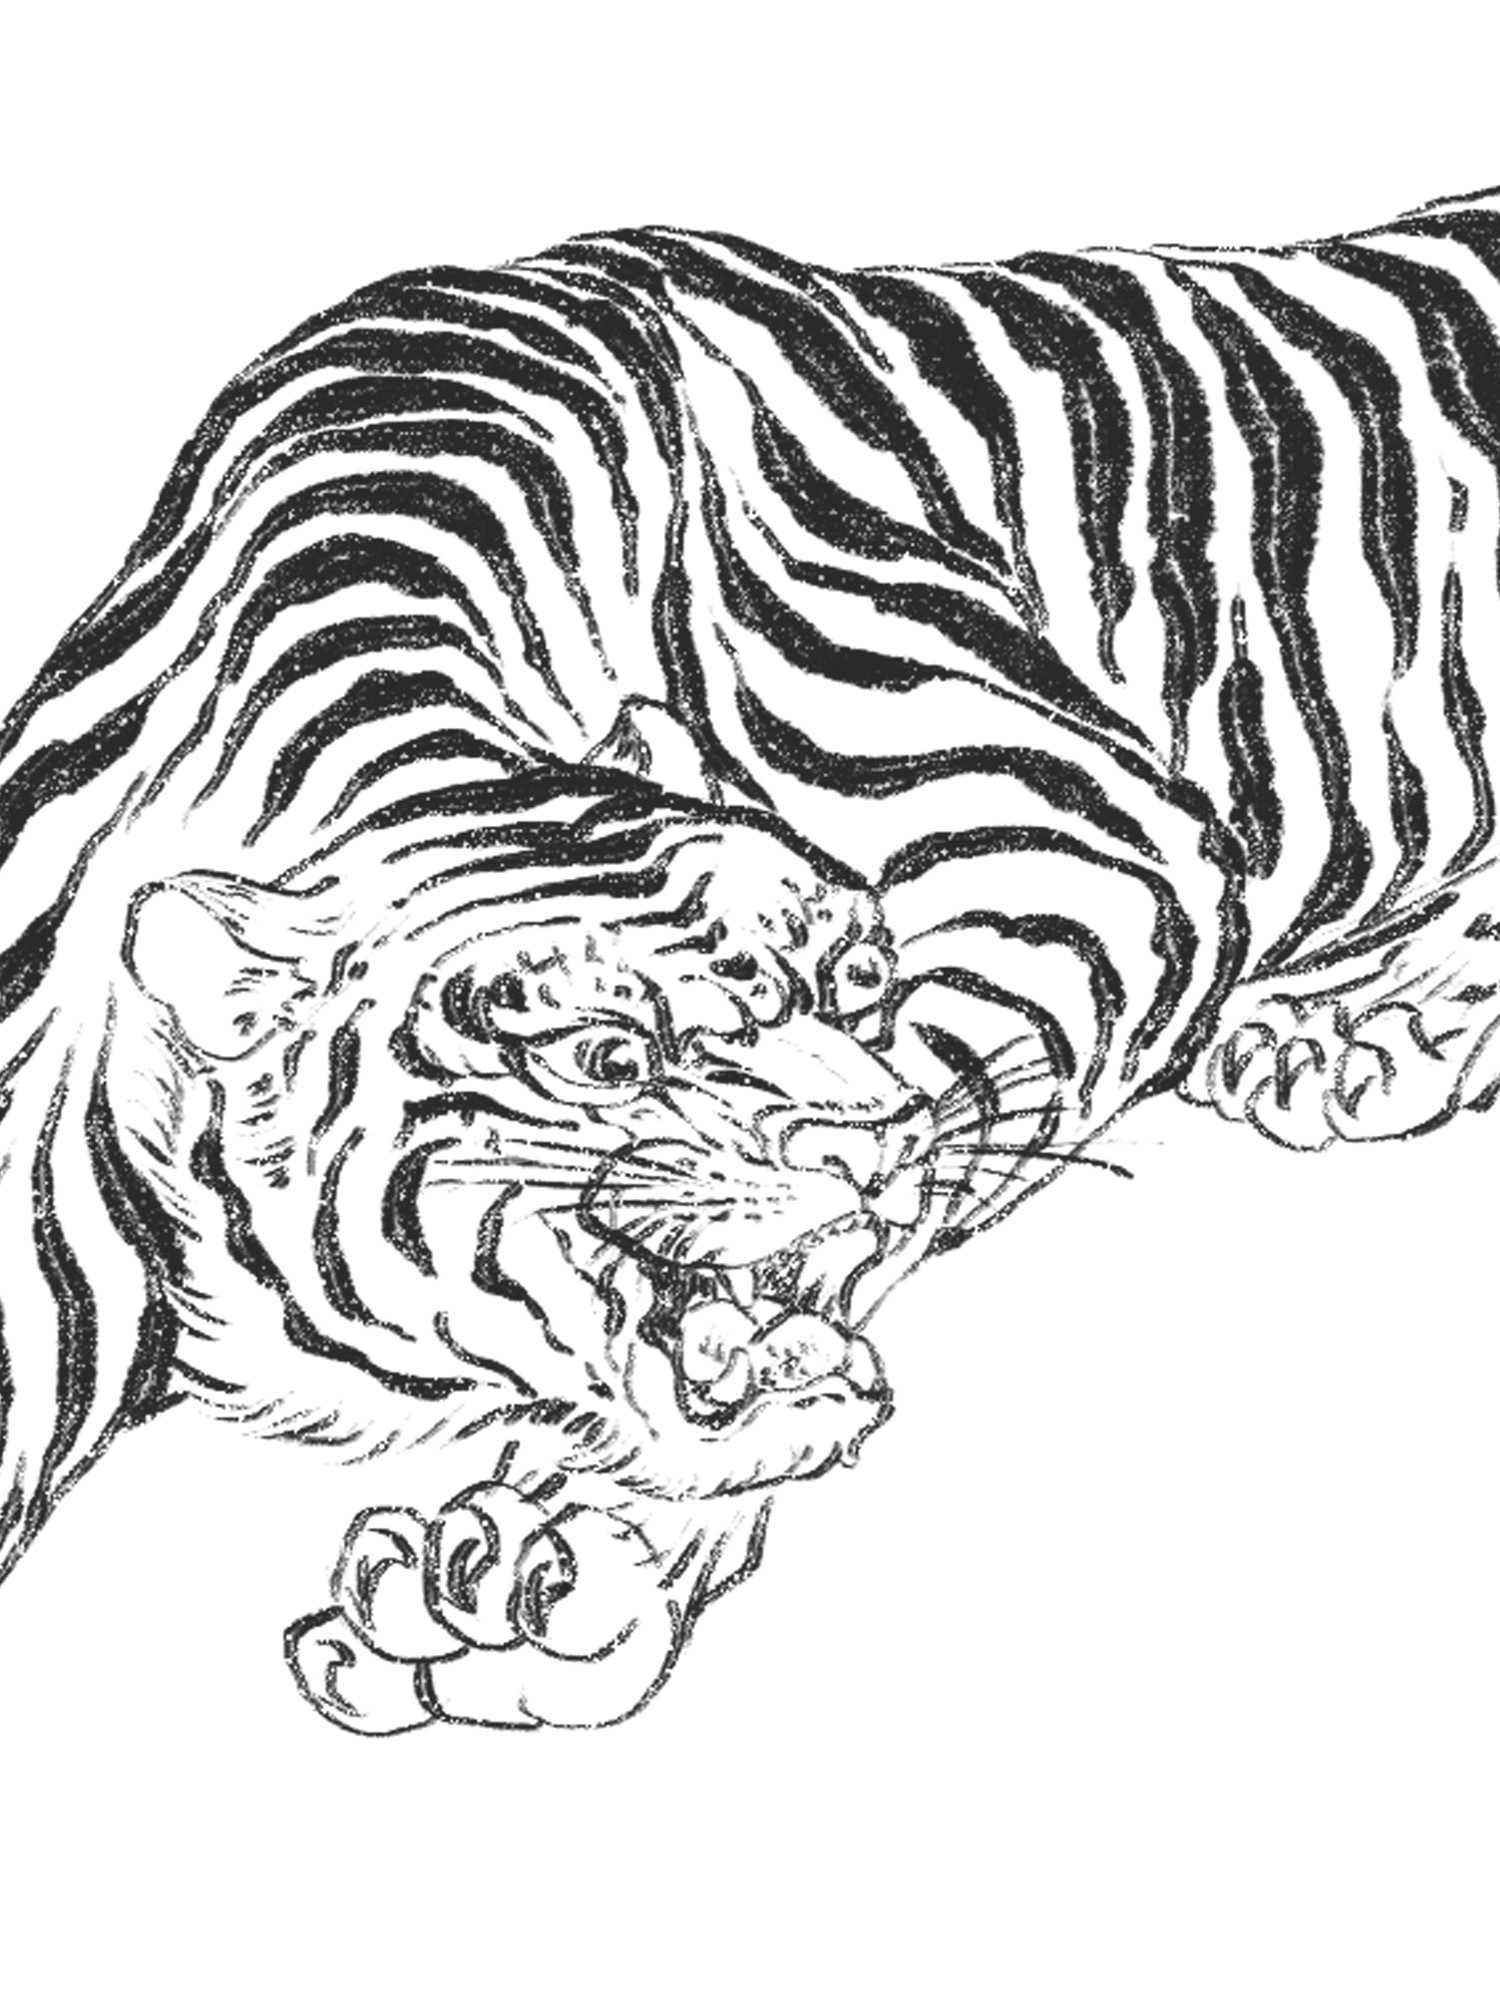 🔥 [44+] Black and White Tiger Wallpaper | WallpaperSafari